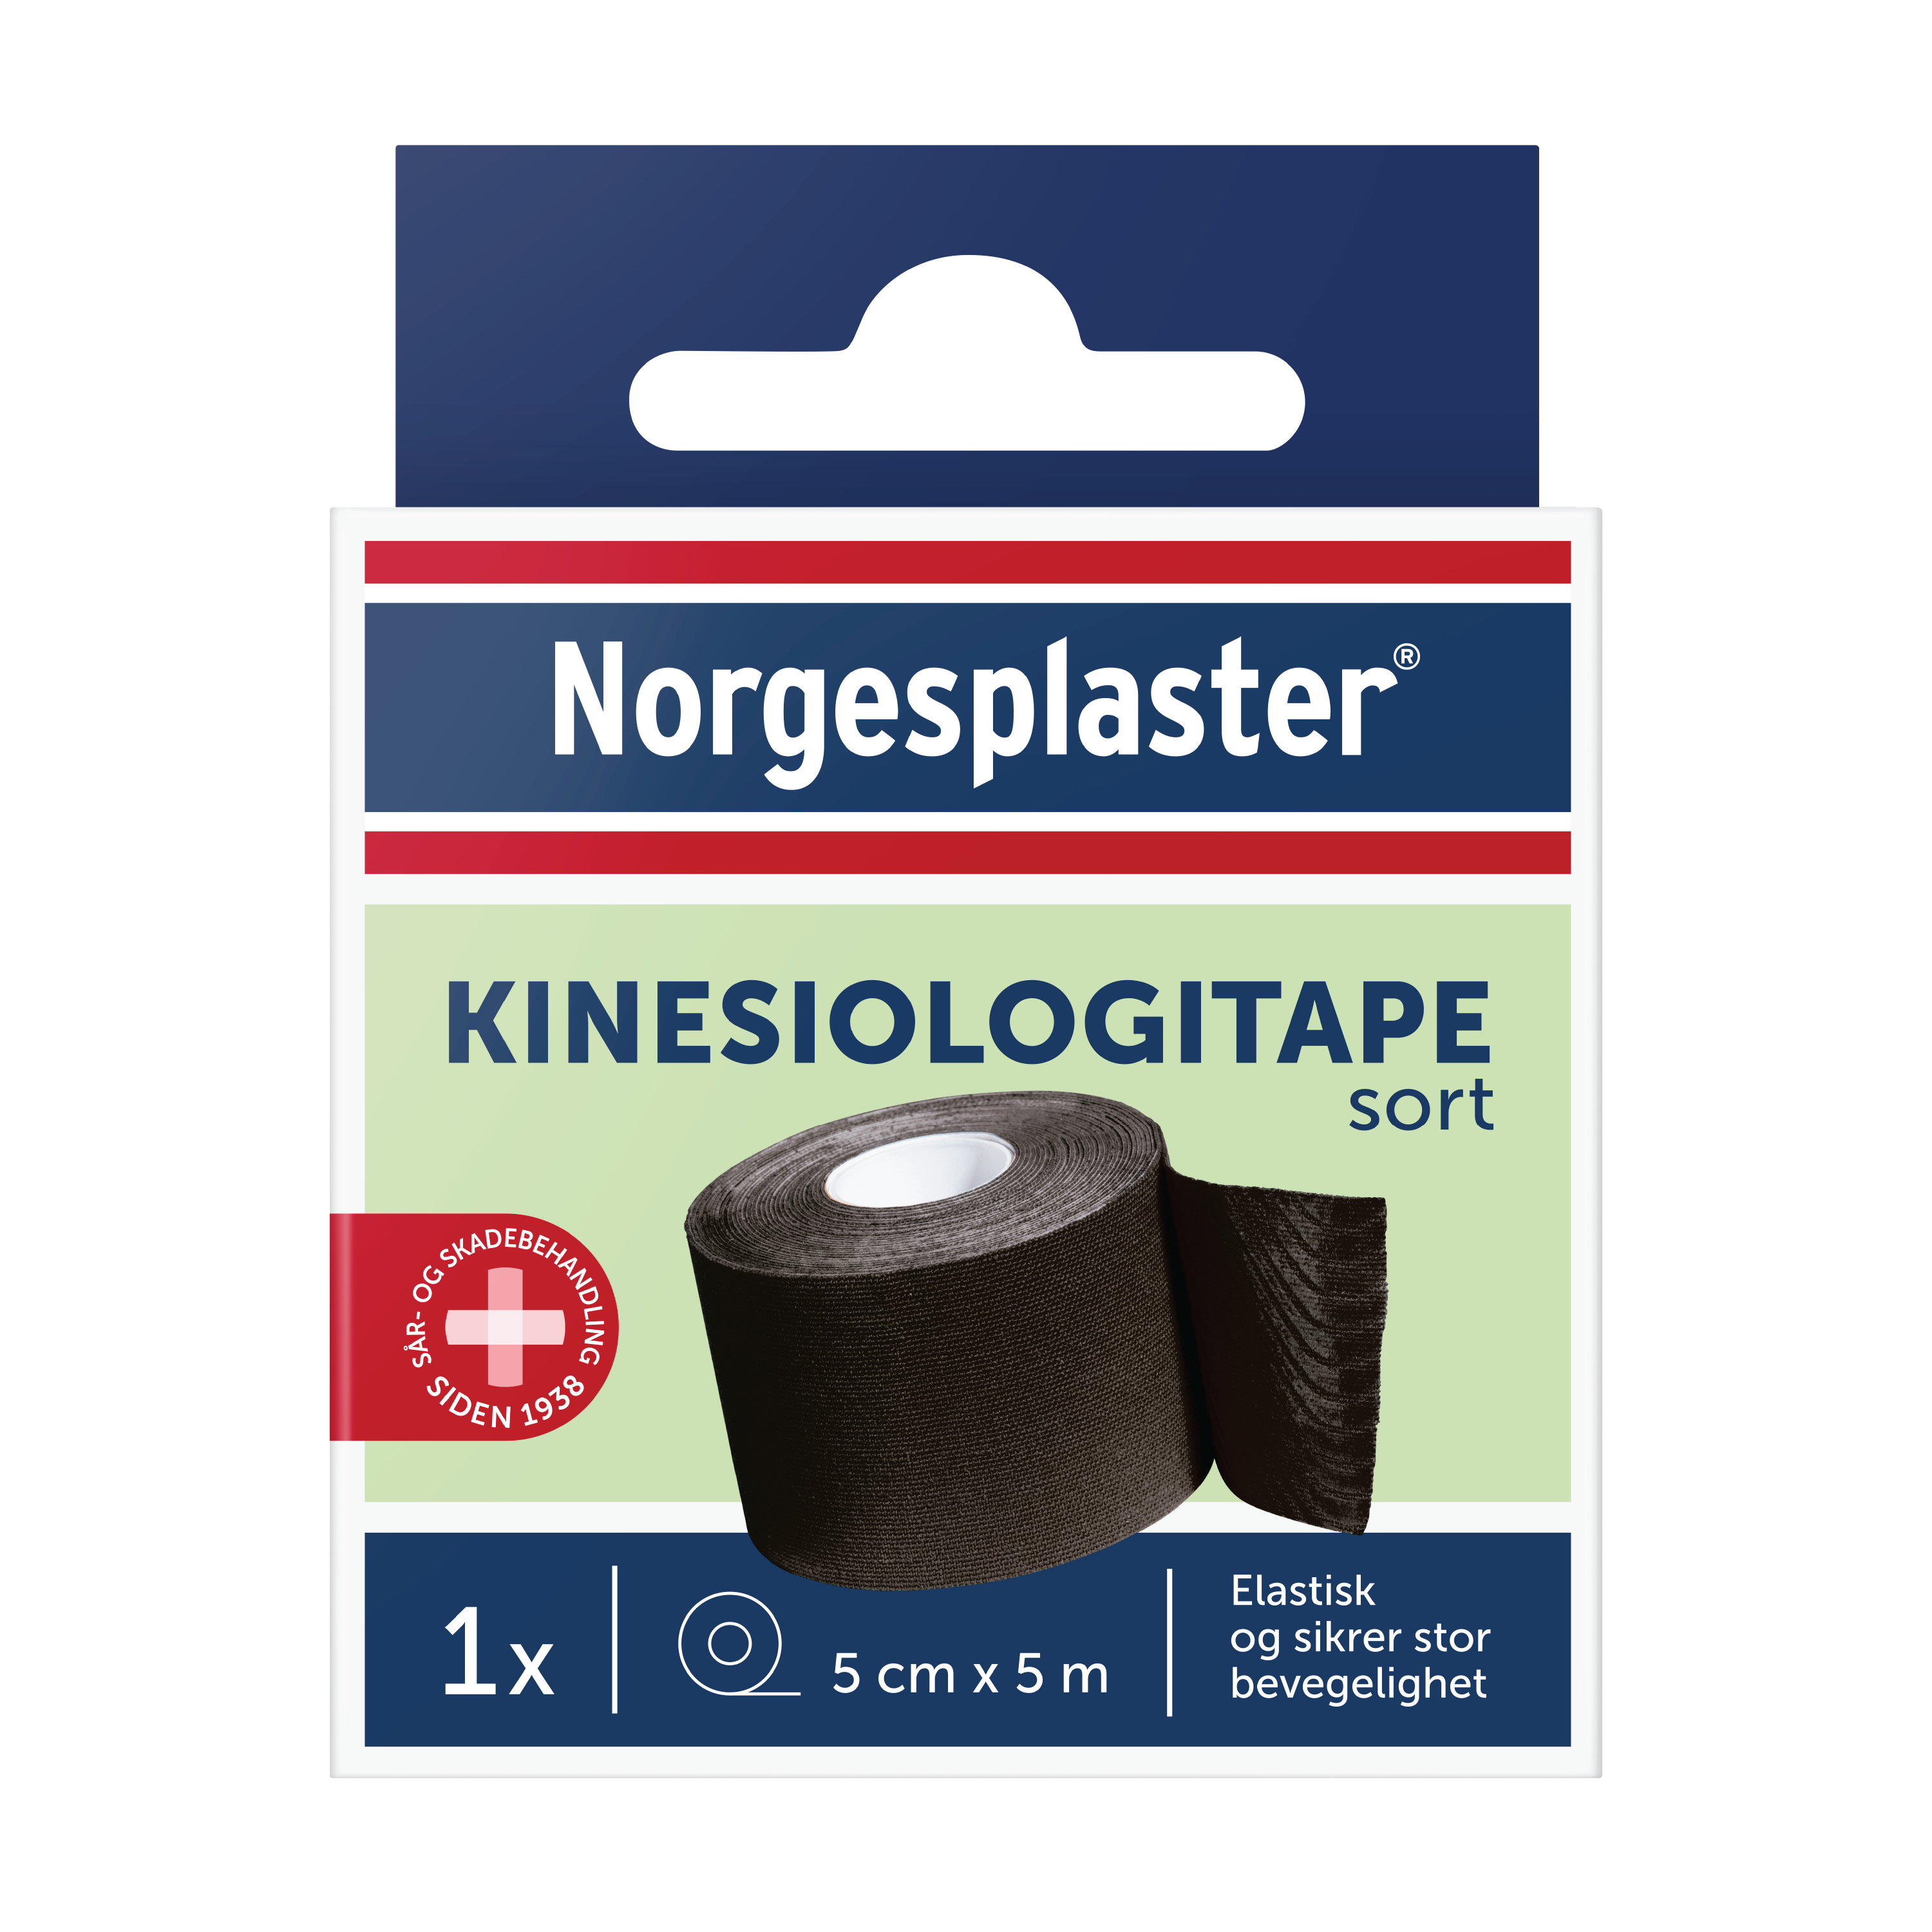 Norgesplaster Kinesiologitape 5cm x 5m, Sort, 1 stk.